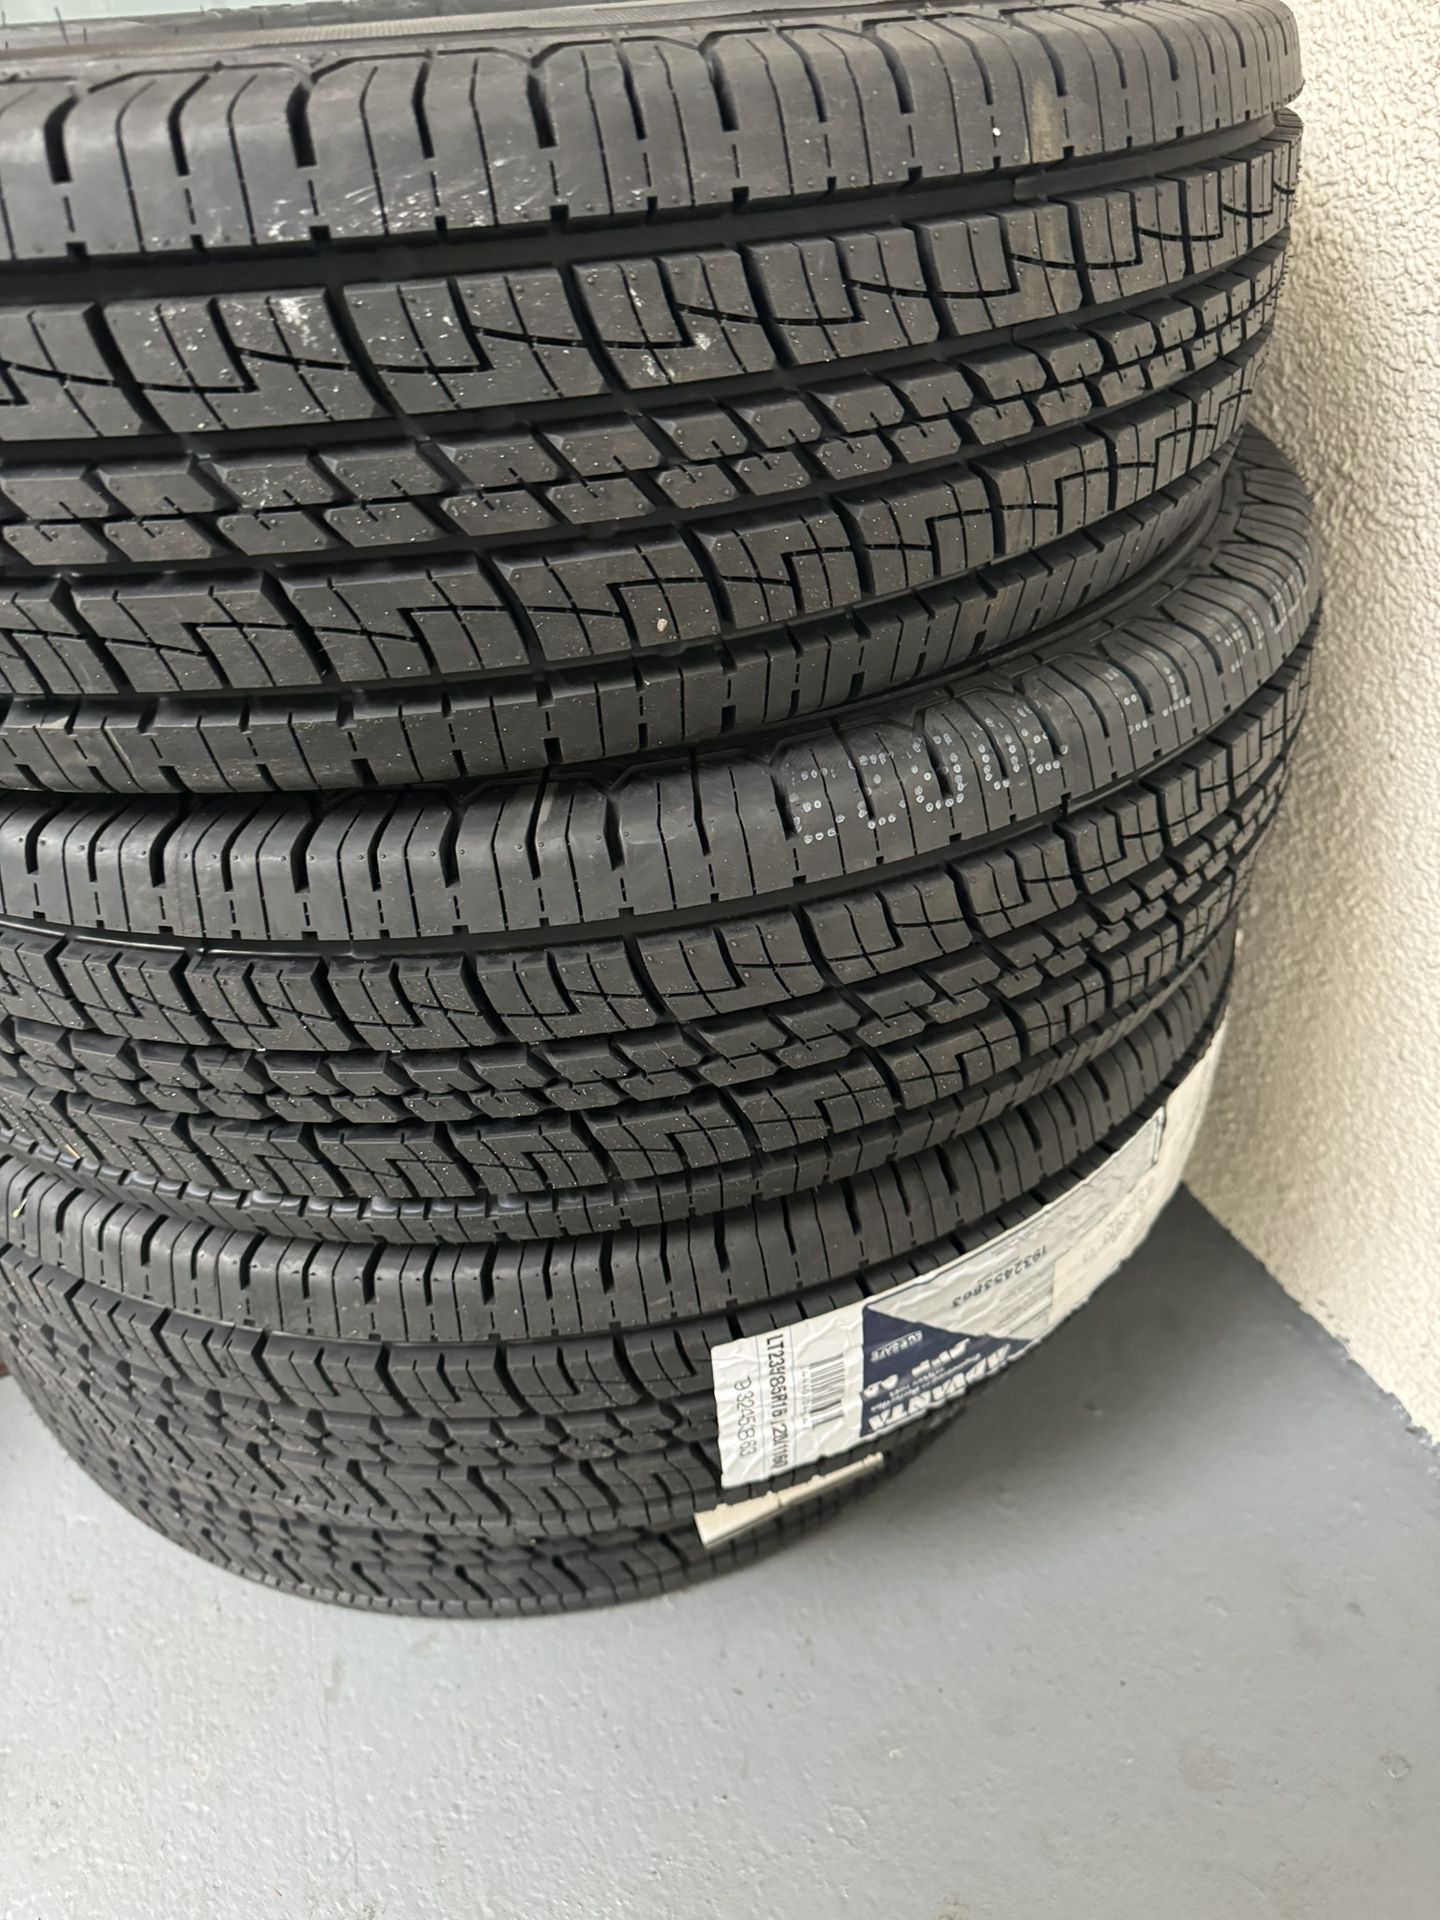 LT235/85R16 Advanta SVT-02 120/116Q Load Range E Black Wall Tire